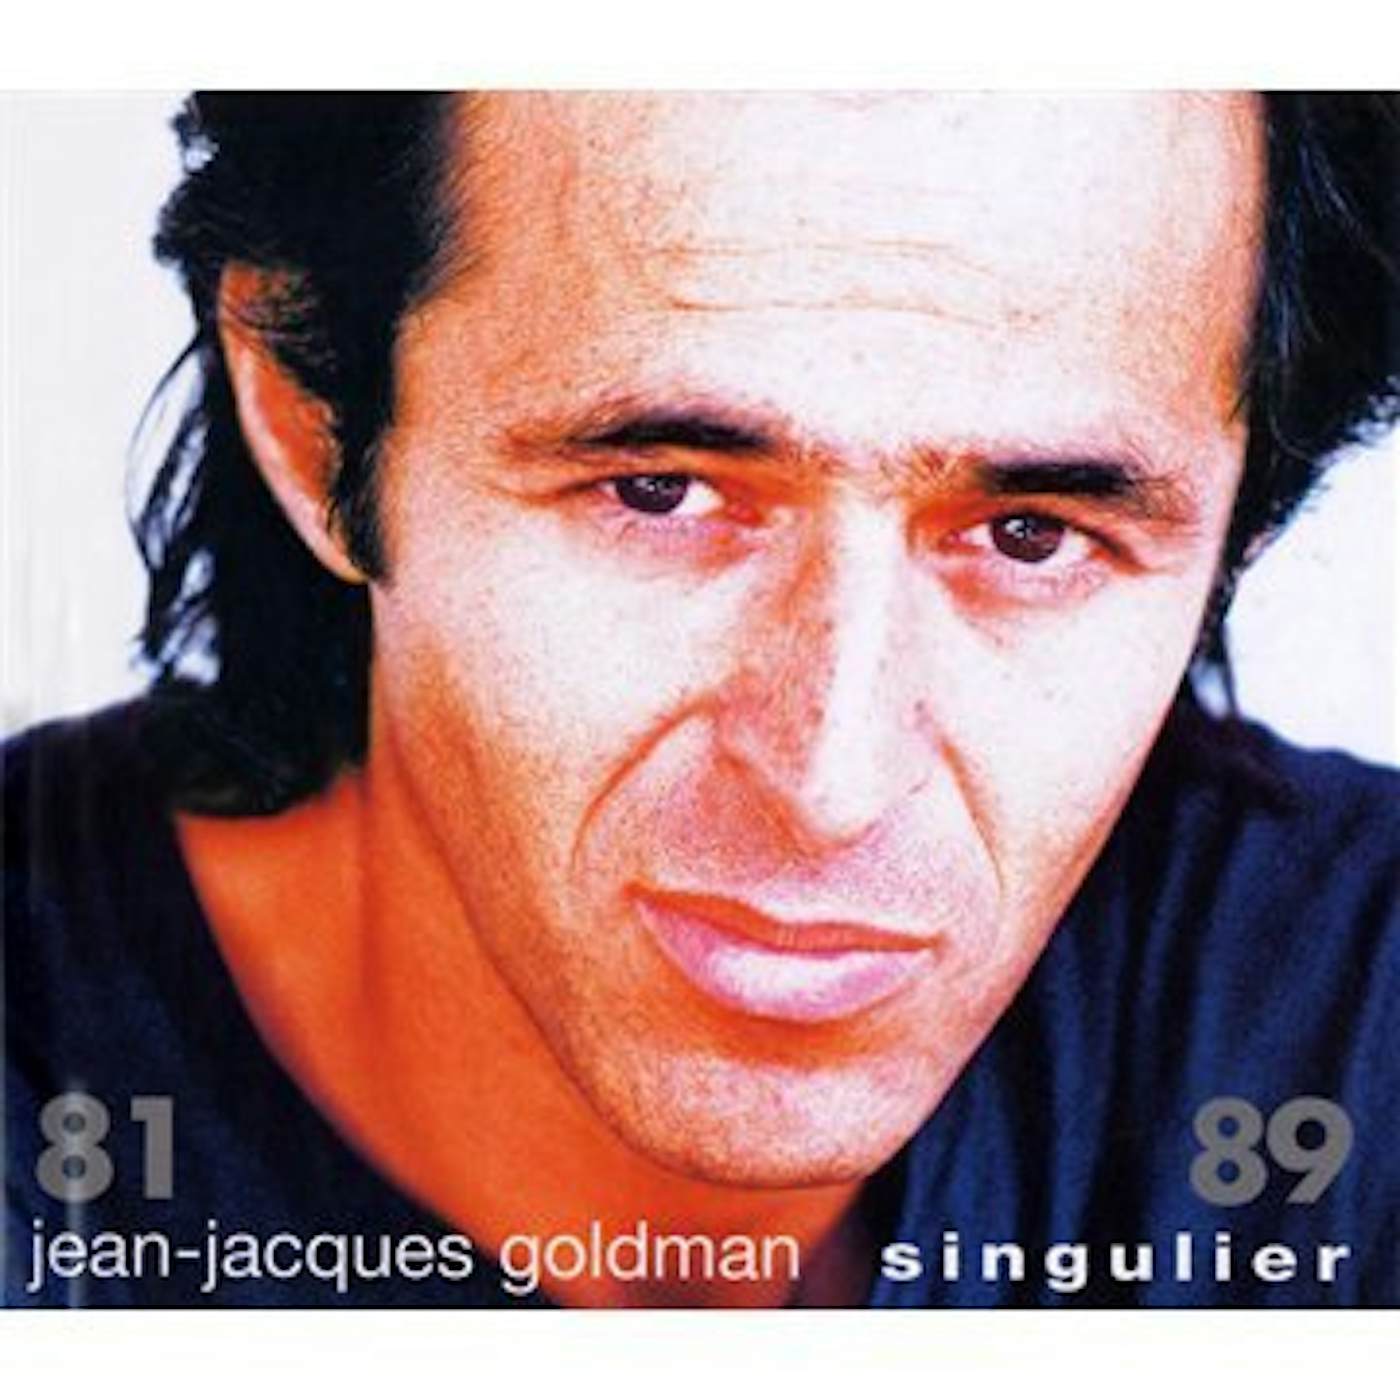 Jean-Jacques Goldman SINGULIER 81-89 CD